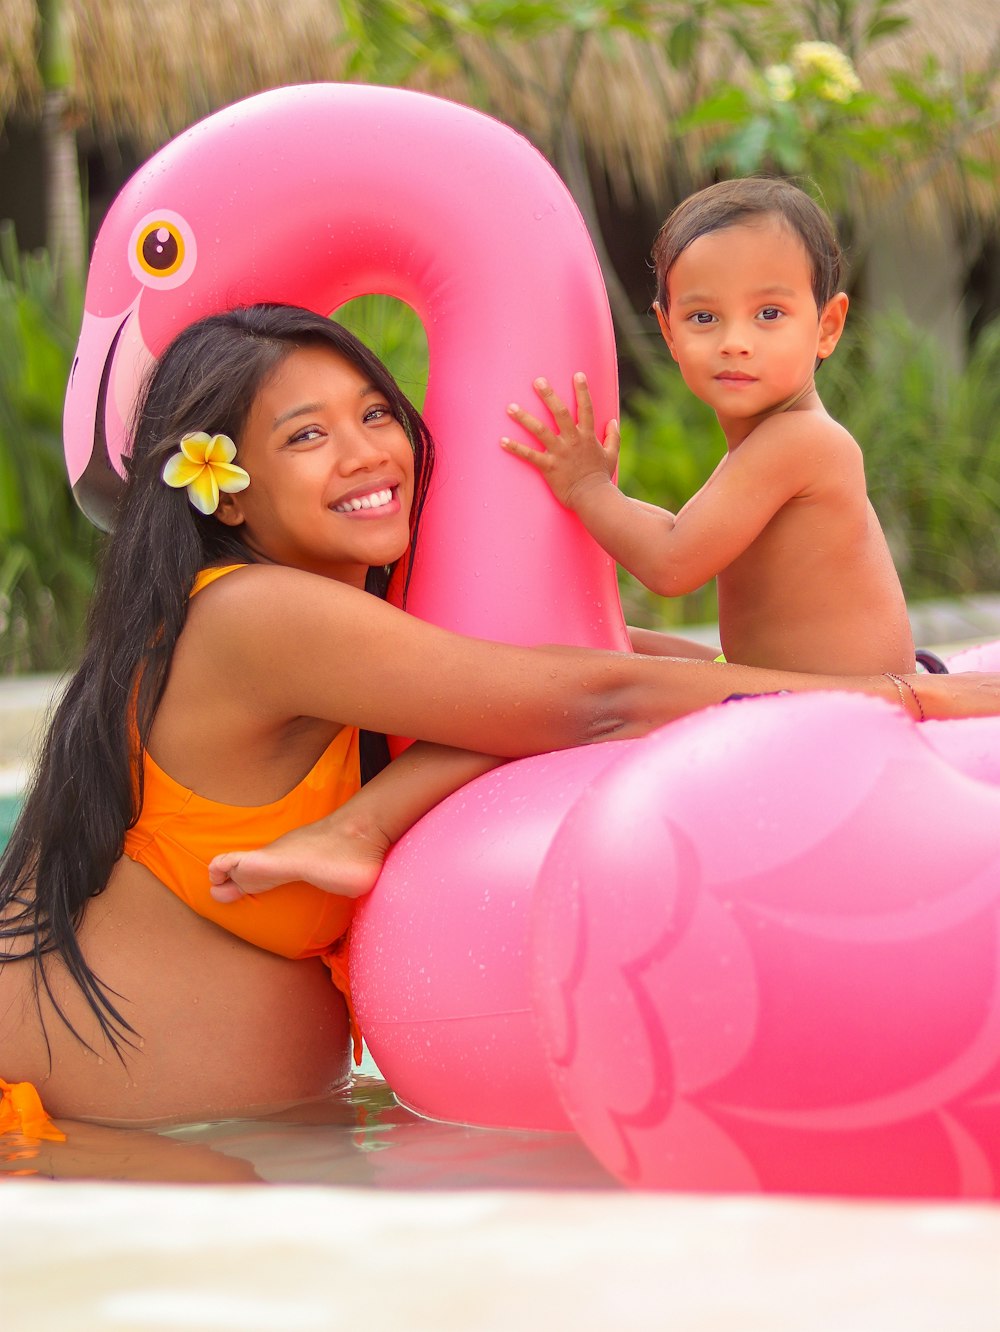 girl in orange bikini top holding pink inflatable balloons